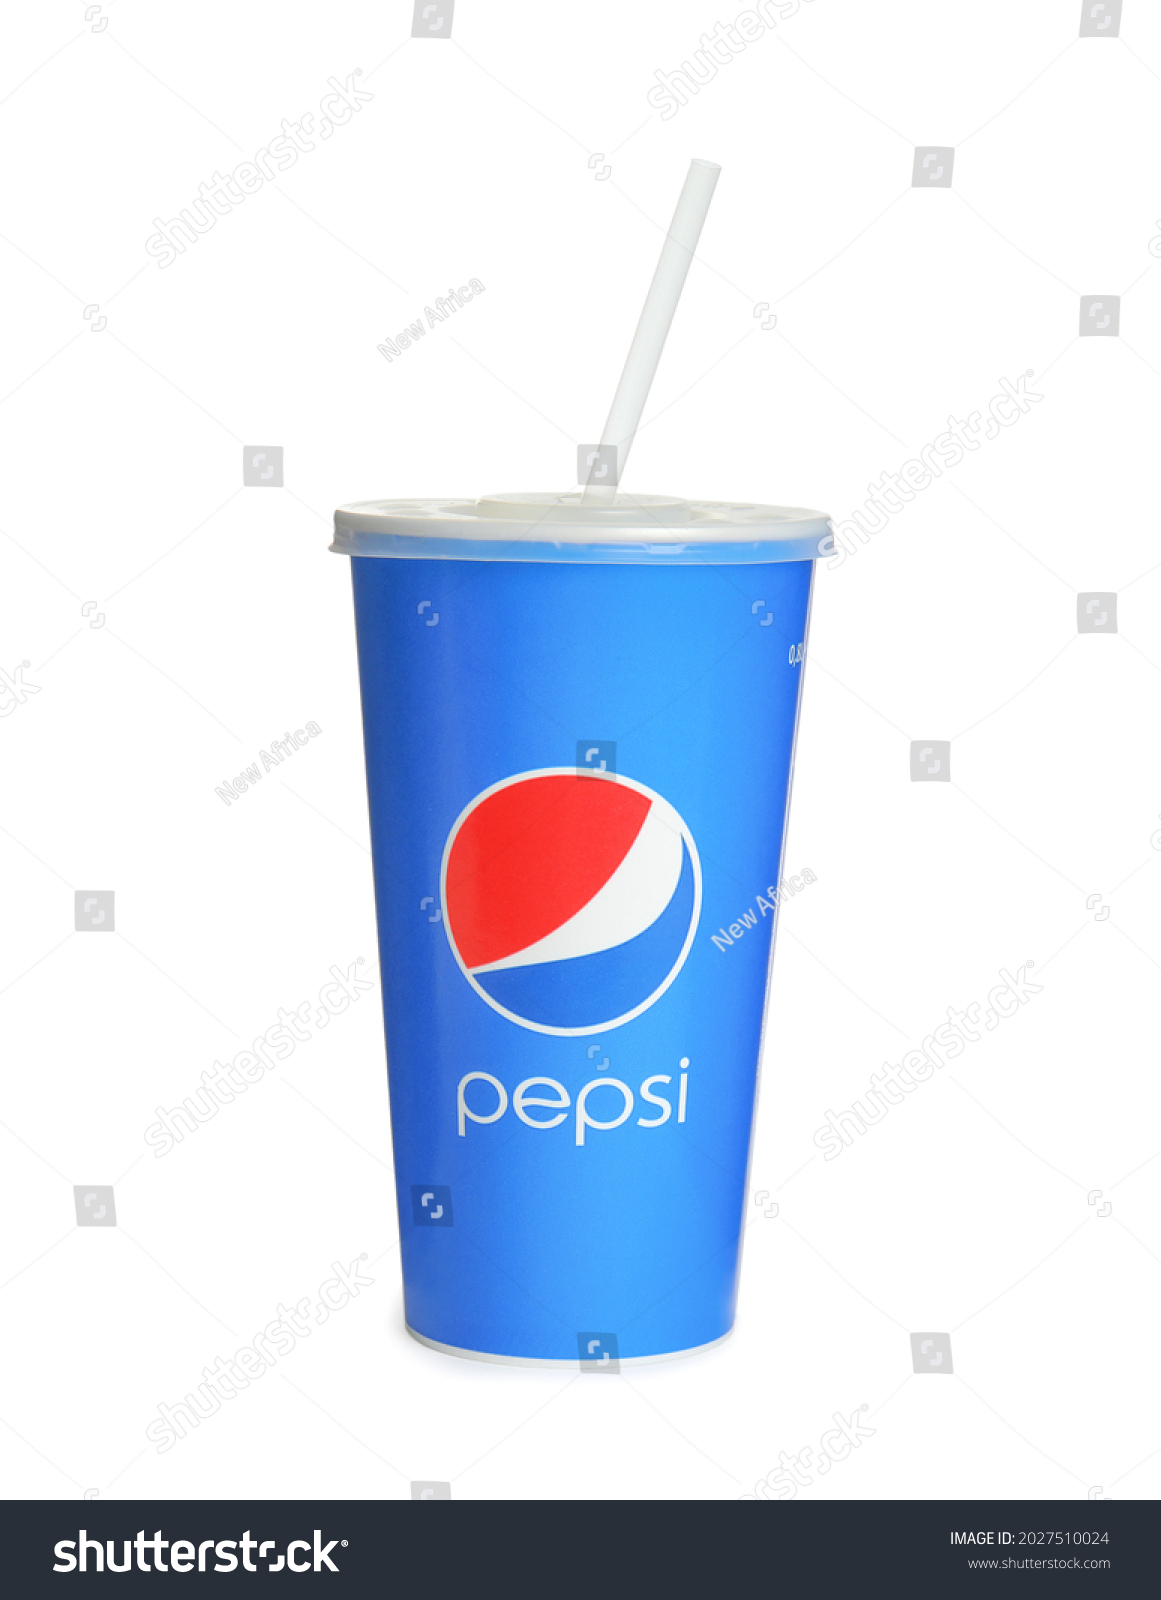 2,164 Pepsi In Cup Images, Stock Photos & Vectors | Shutterstock